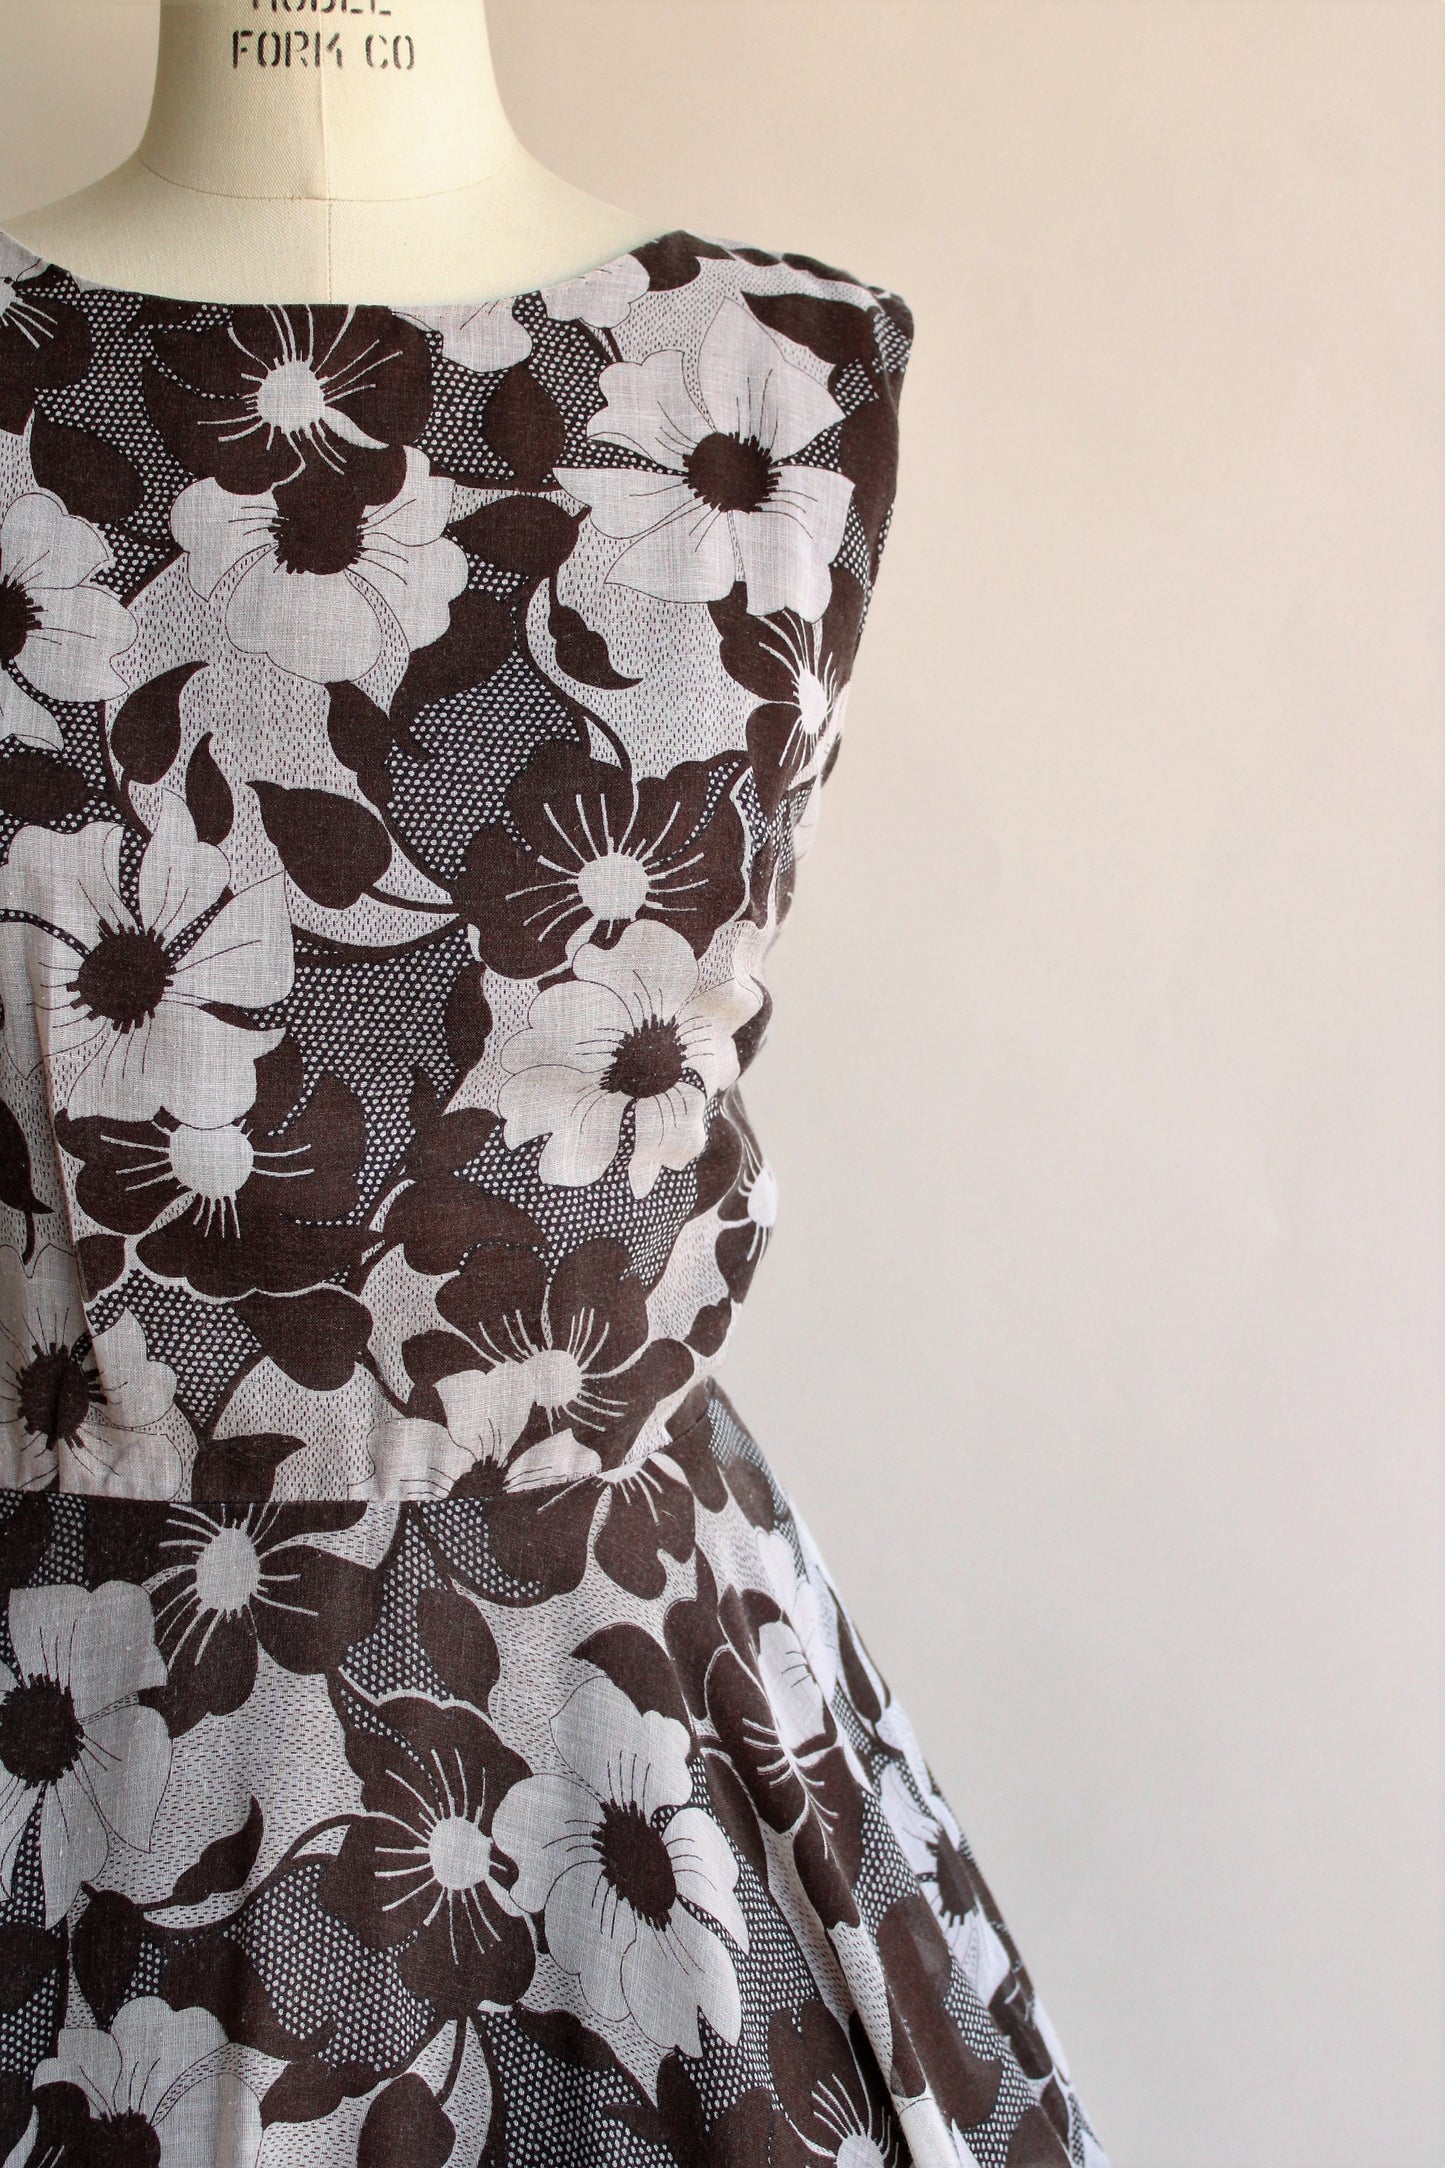 Vintage 1970s Does 1950s Brown Floral Print Dress